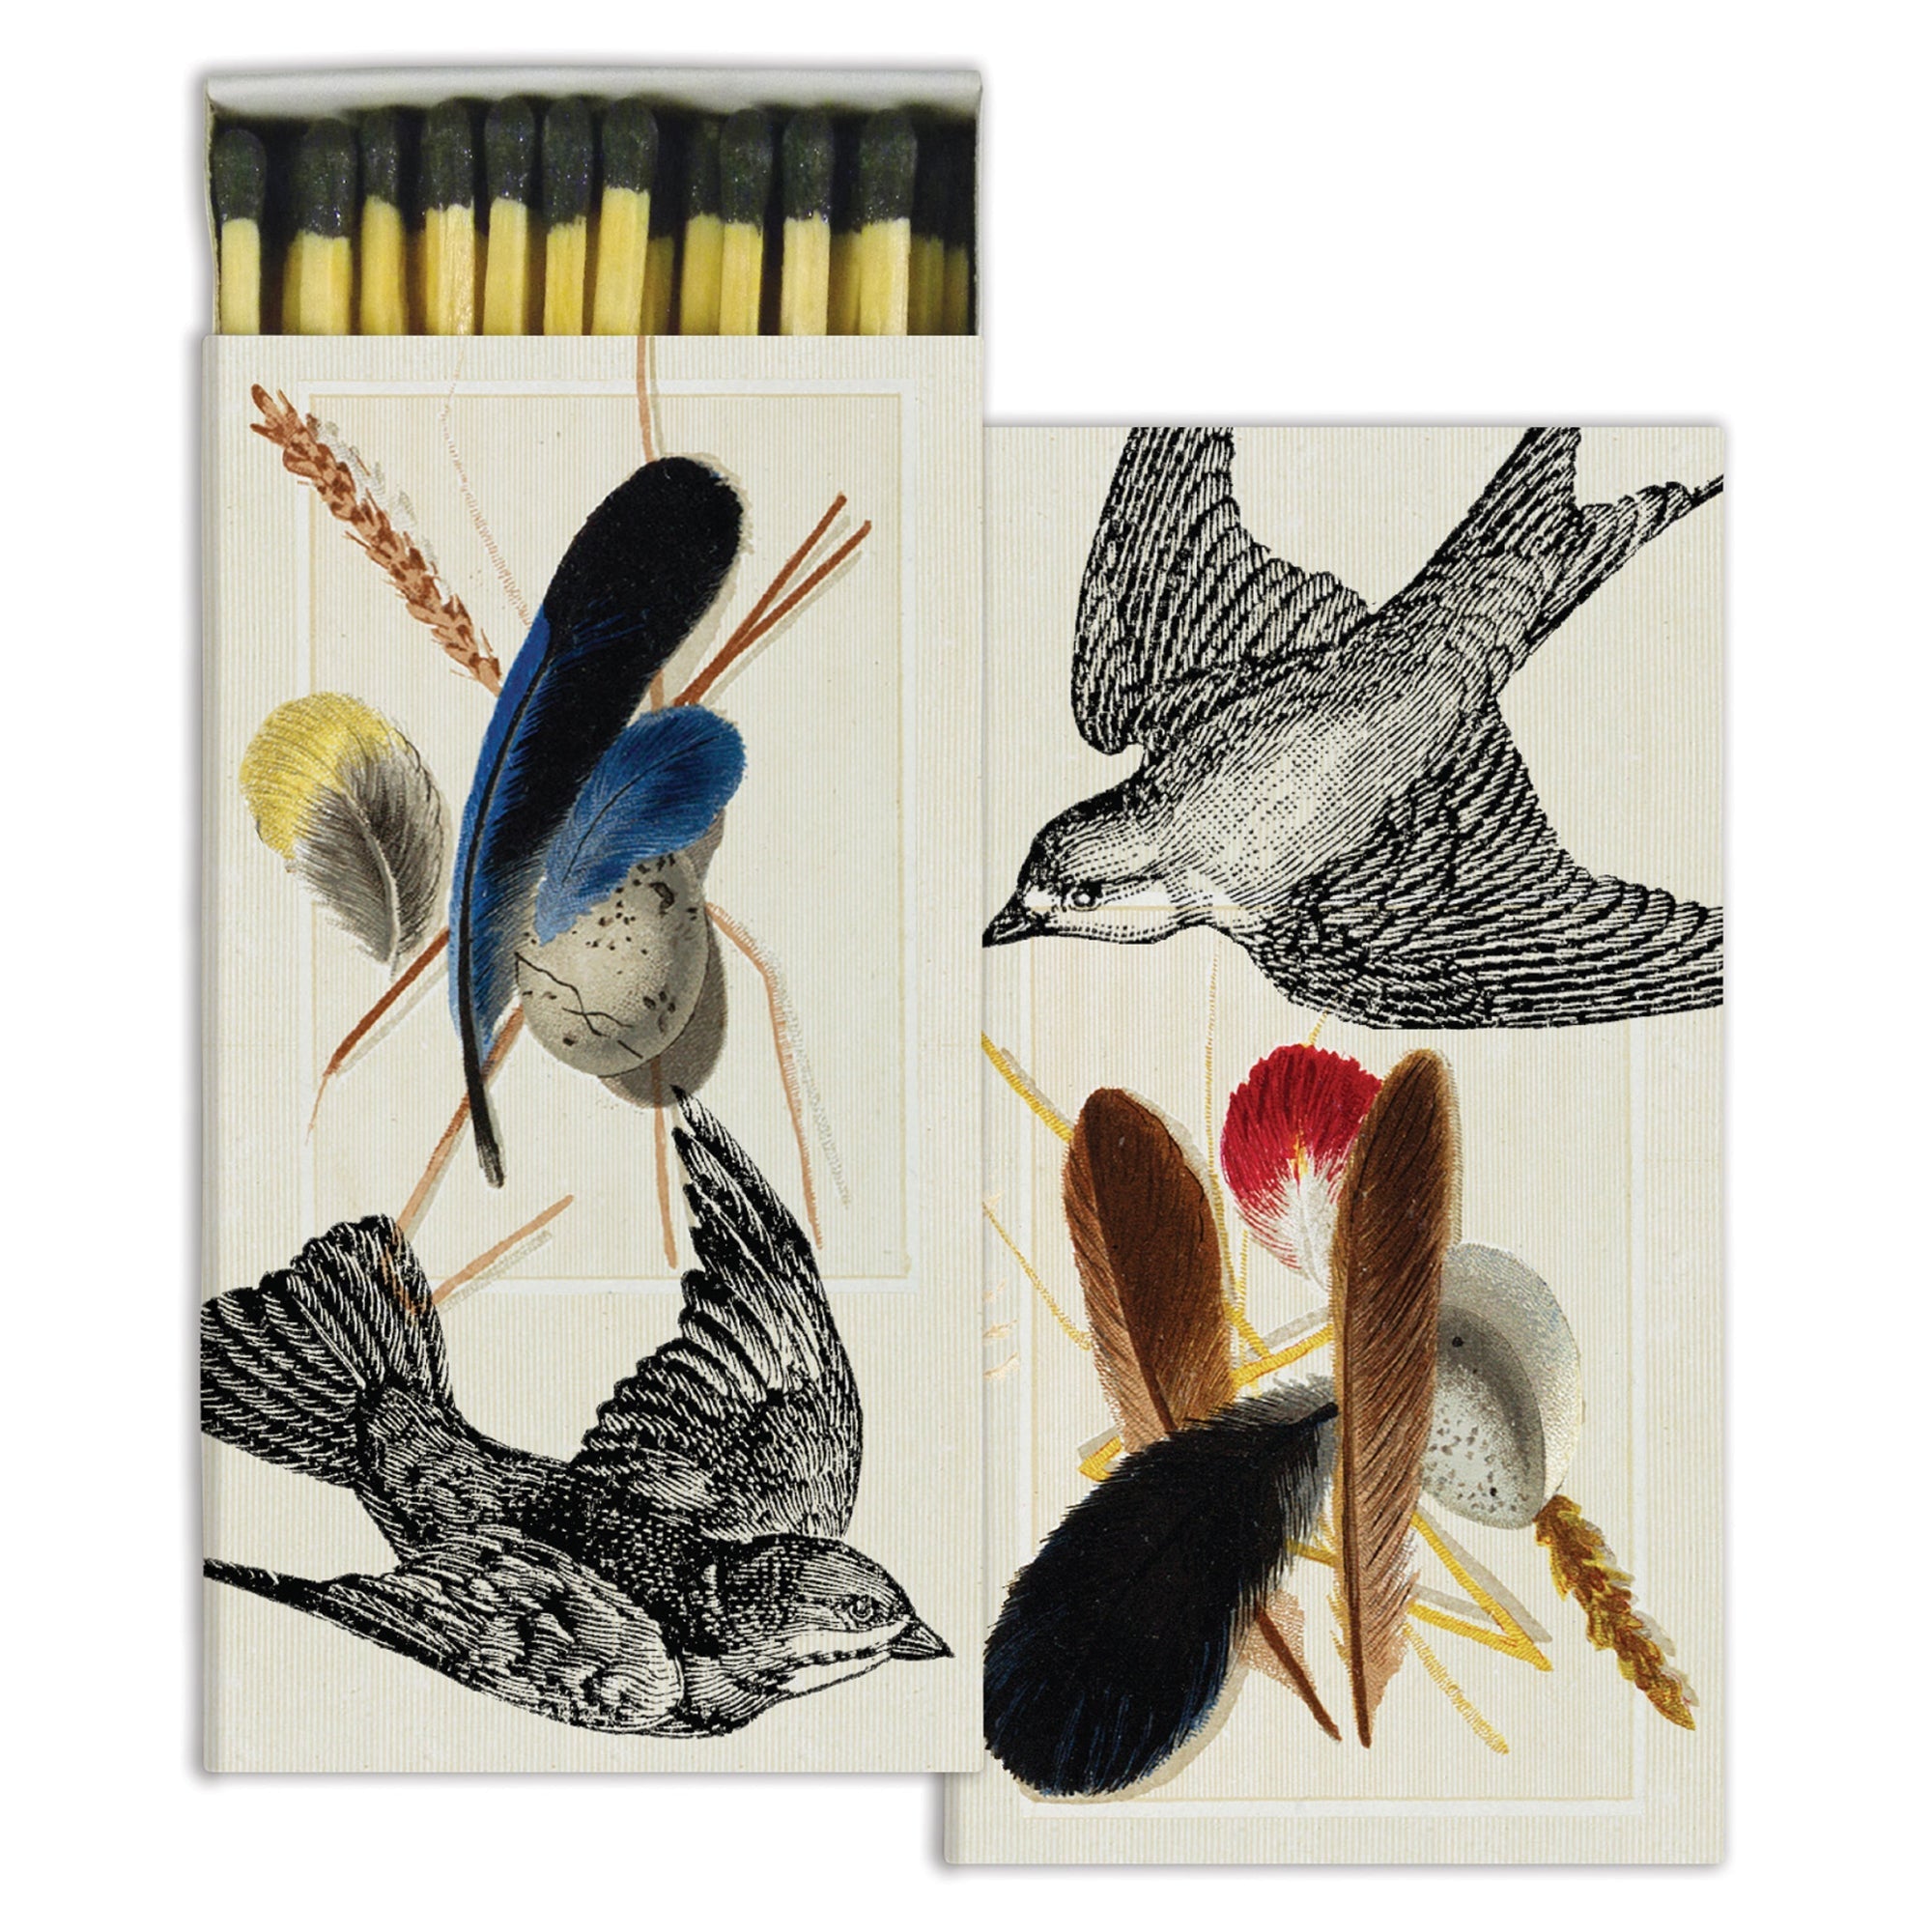 Matches, Sparrows + Specimens